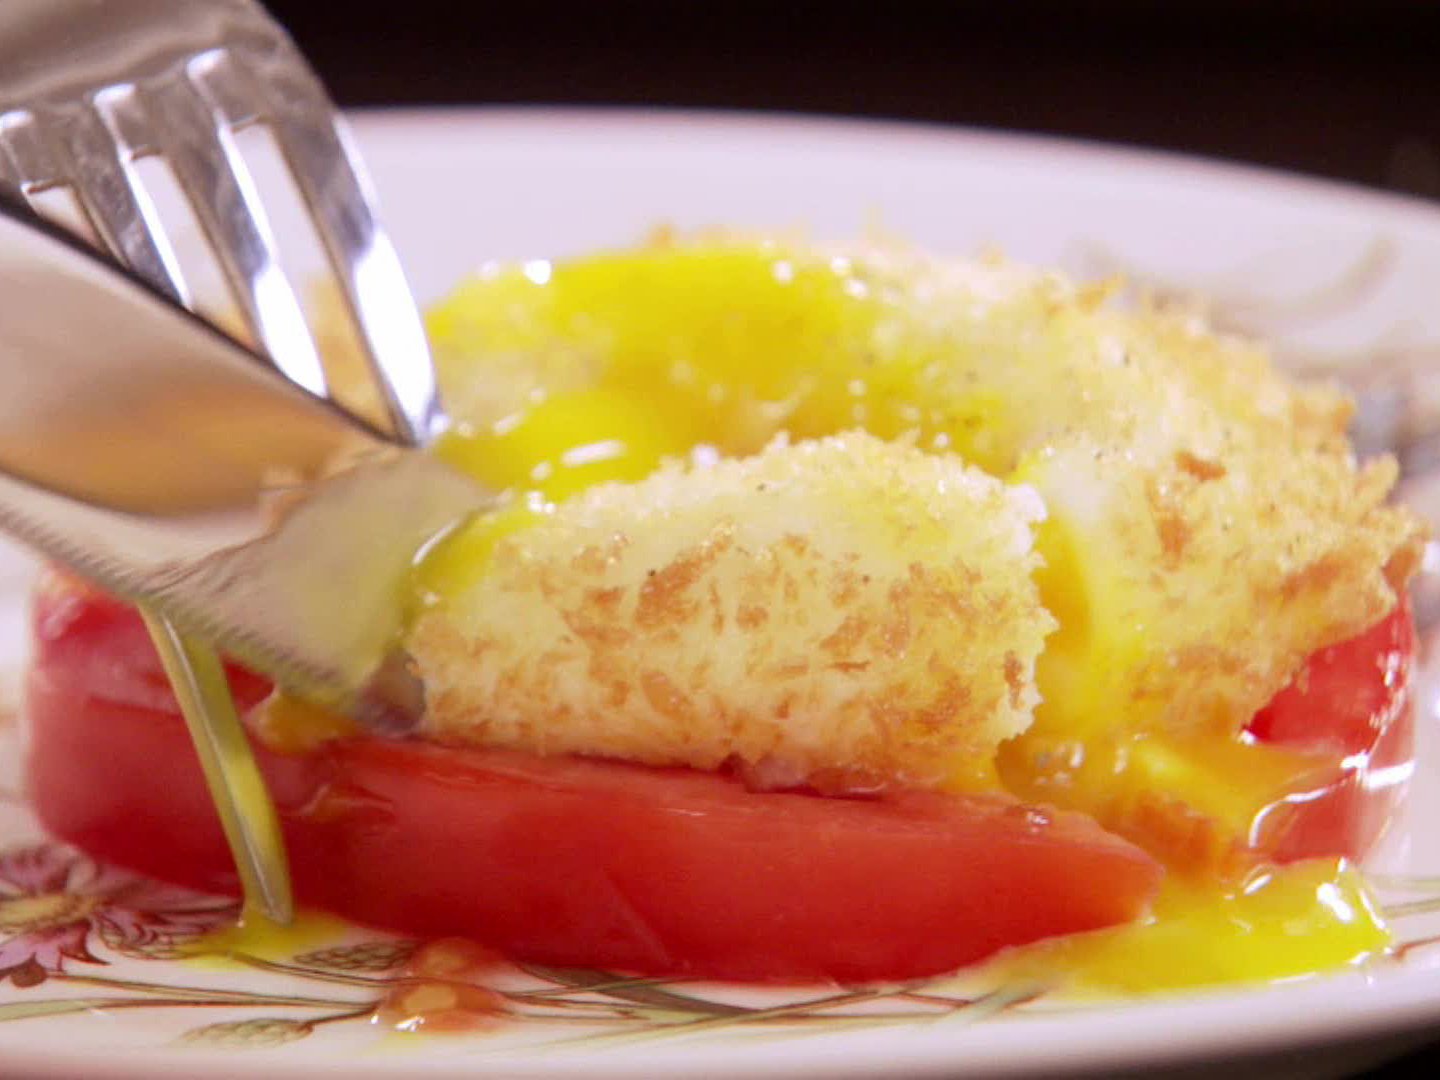 https://www.foodnetwork.com/content/dam/images/food/fullset/2011/7/26/0/VF0611_deep-fried-poached-egg-over-heirloom-tomato_s4x3.jpg